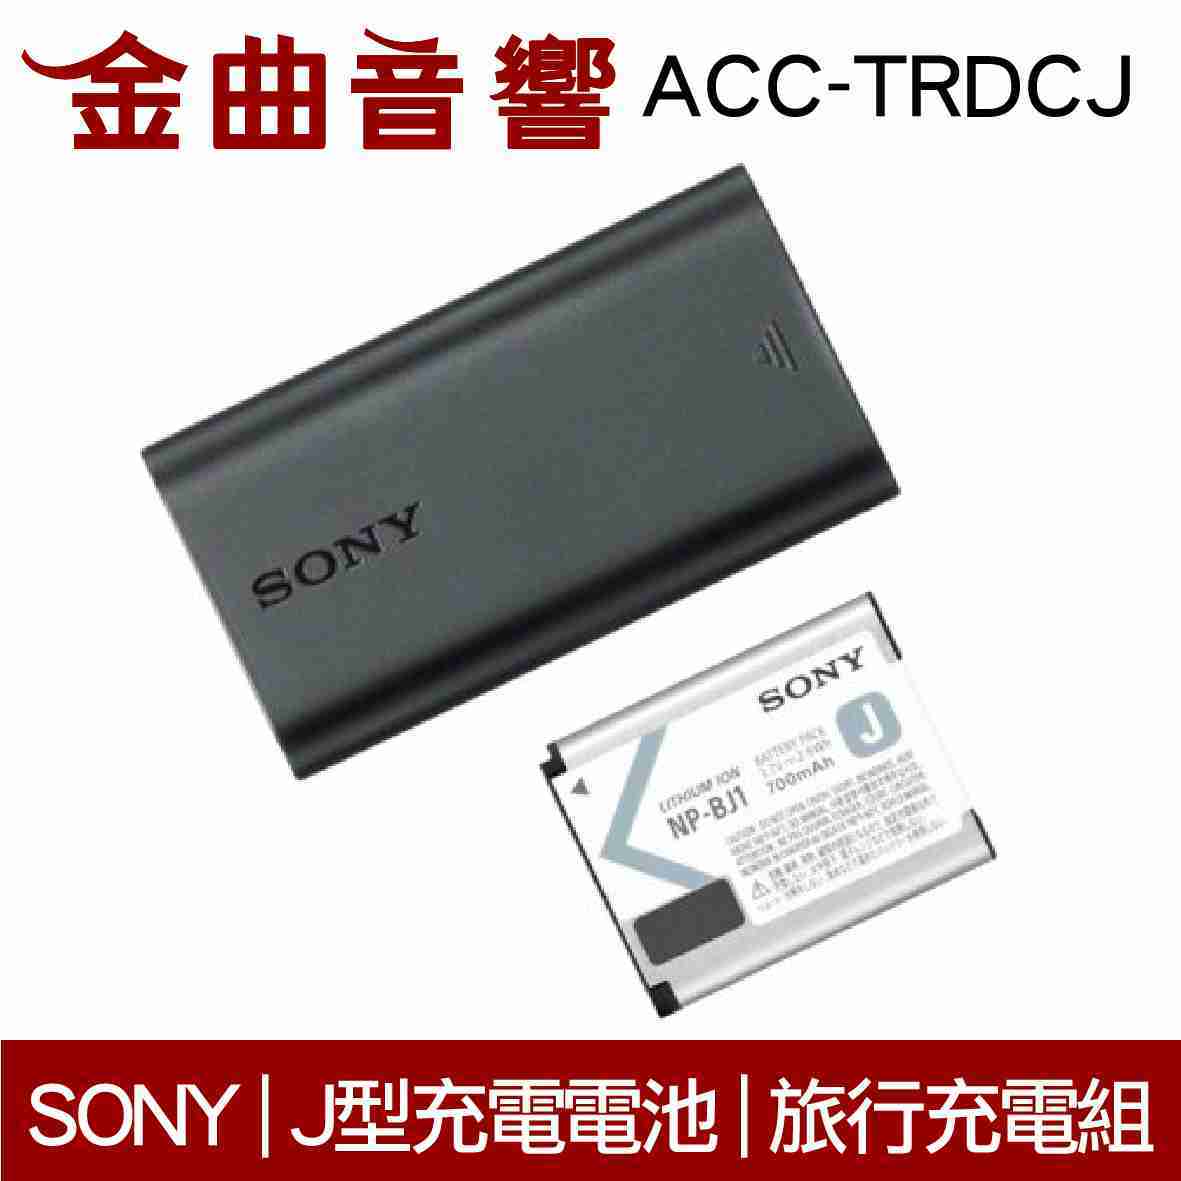 SONY 索尼 ACC-TRDCJ J型充電電池 旅行充電組 | 金曲音響